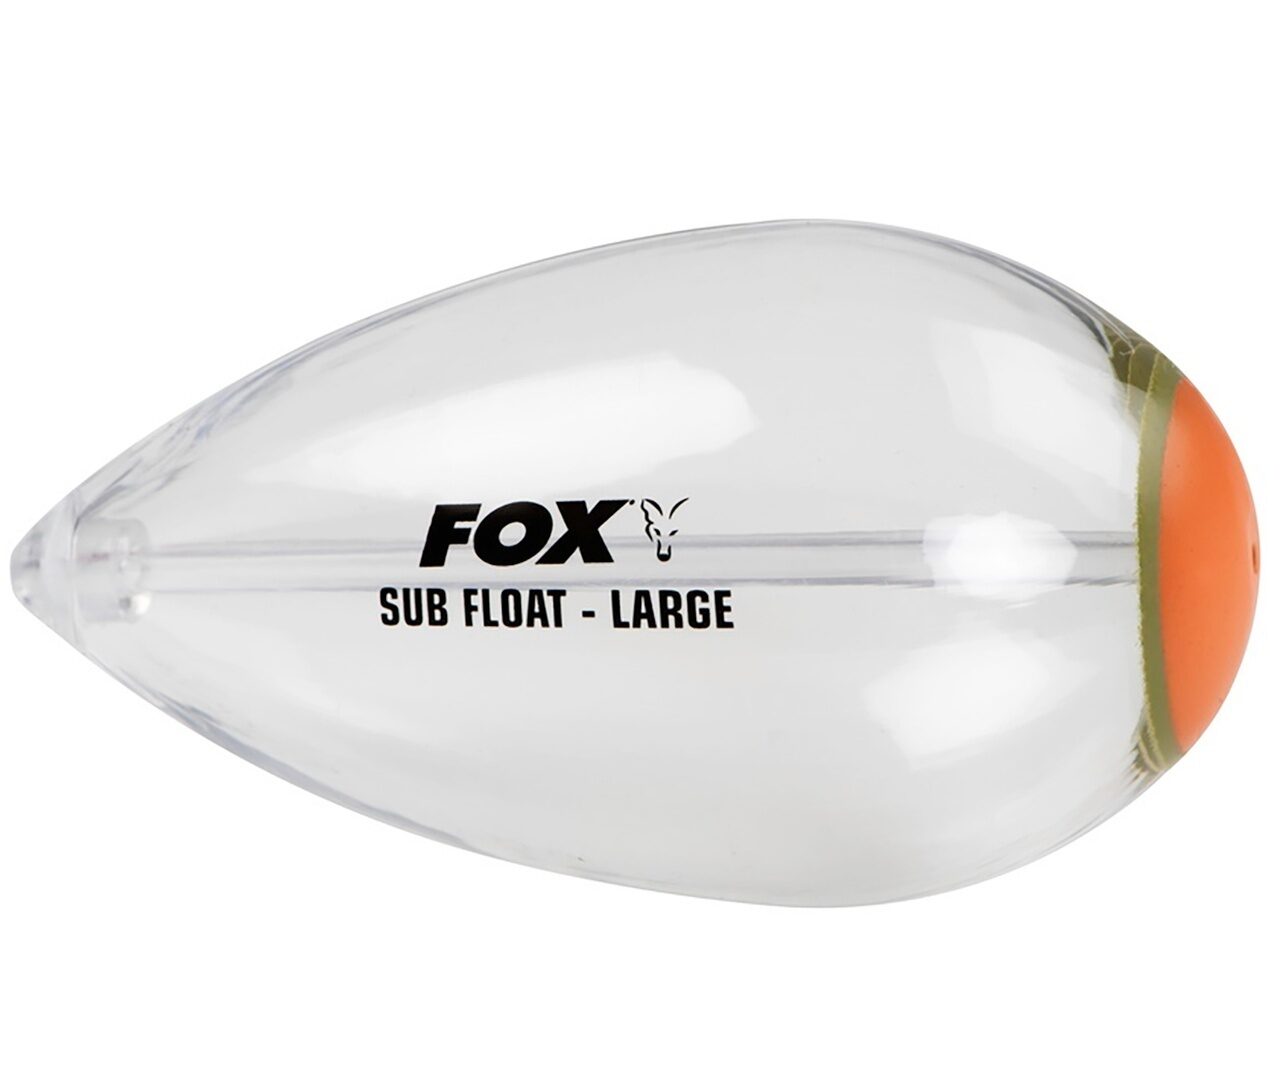 Поплавок контроллер Fox (Фокс) - Carp Subfloats Large, Размер Большой, 2 шт